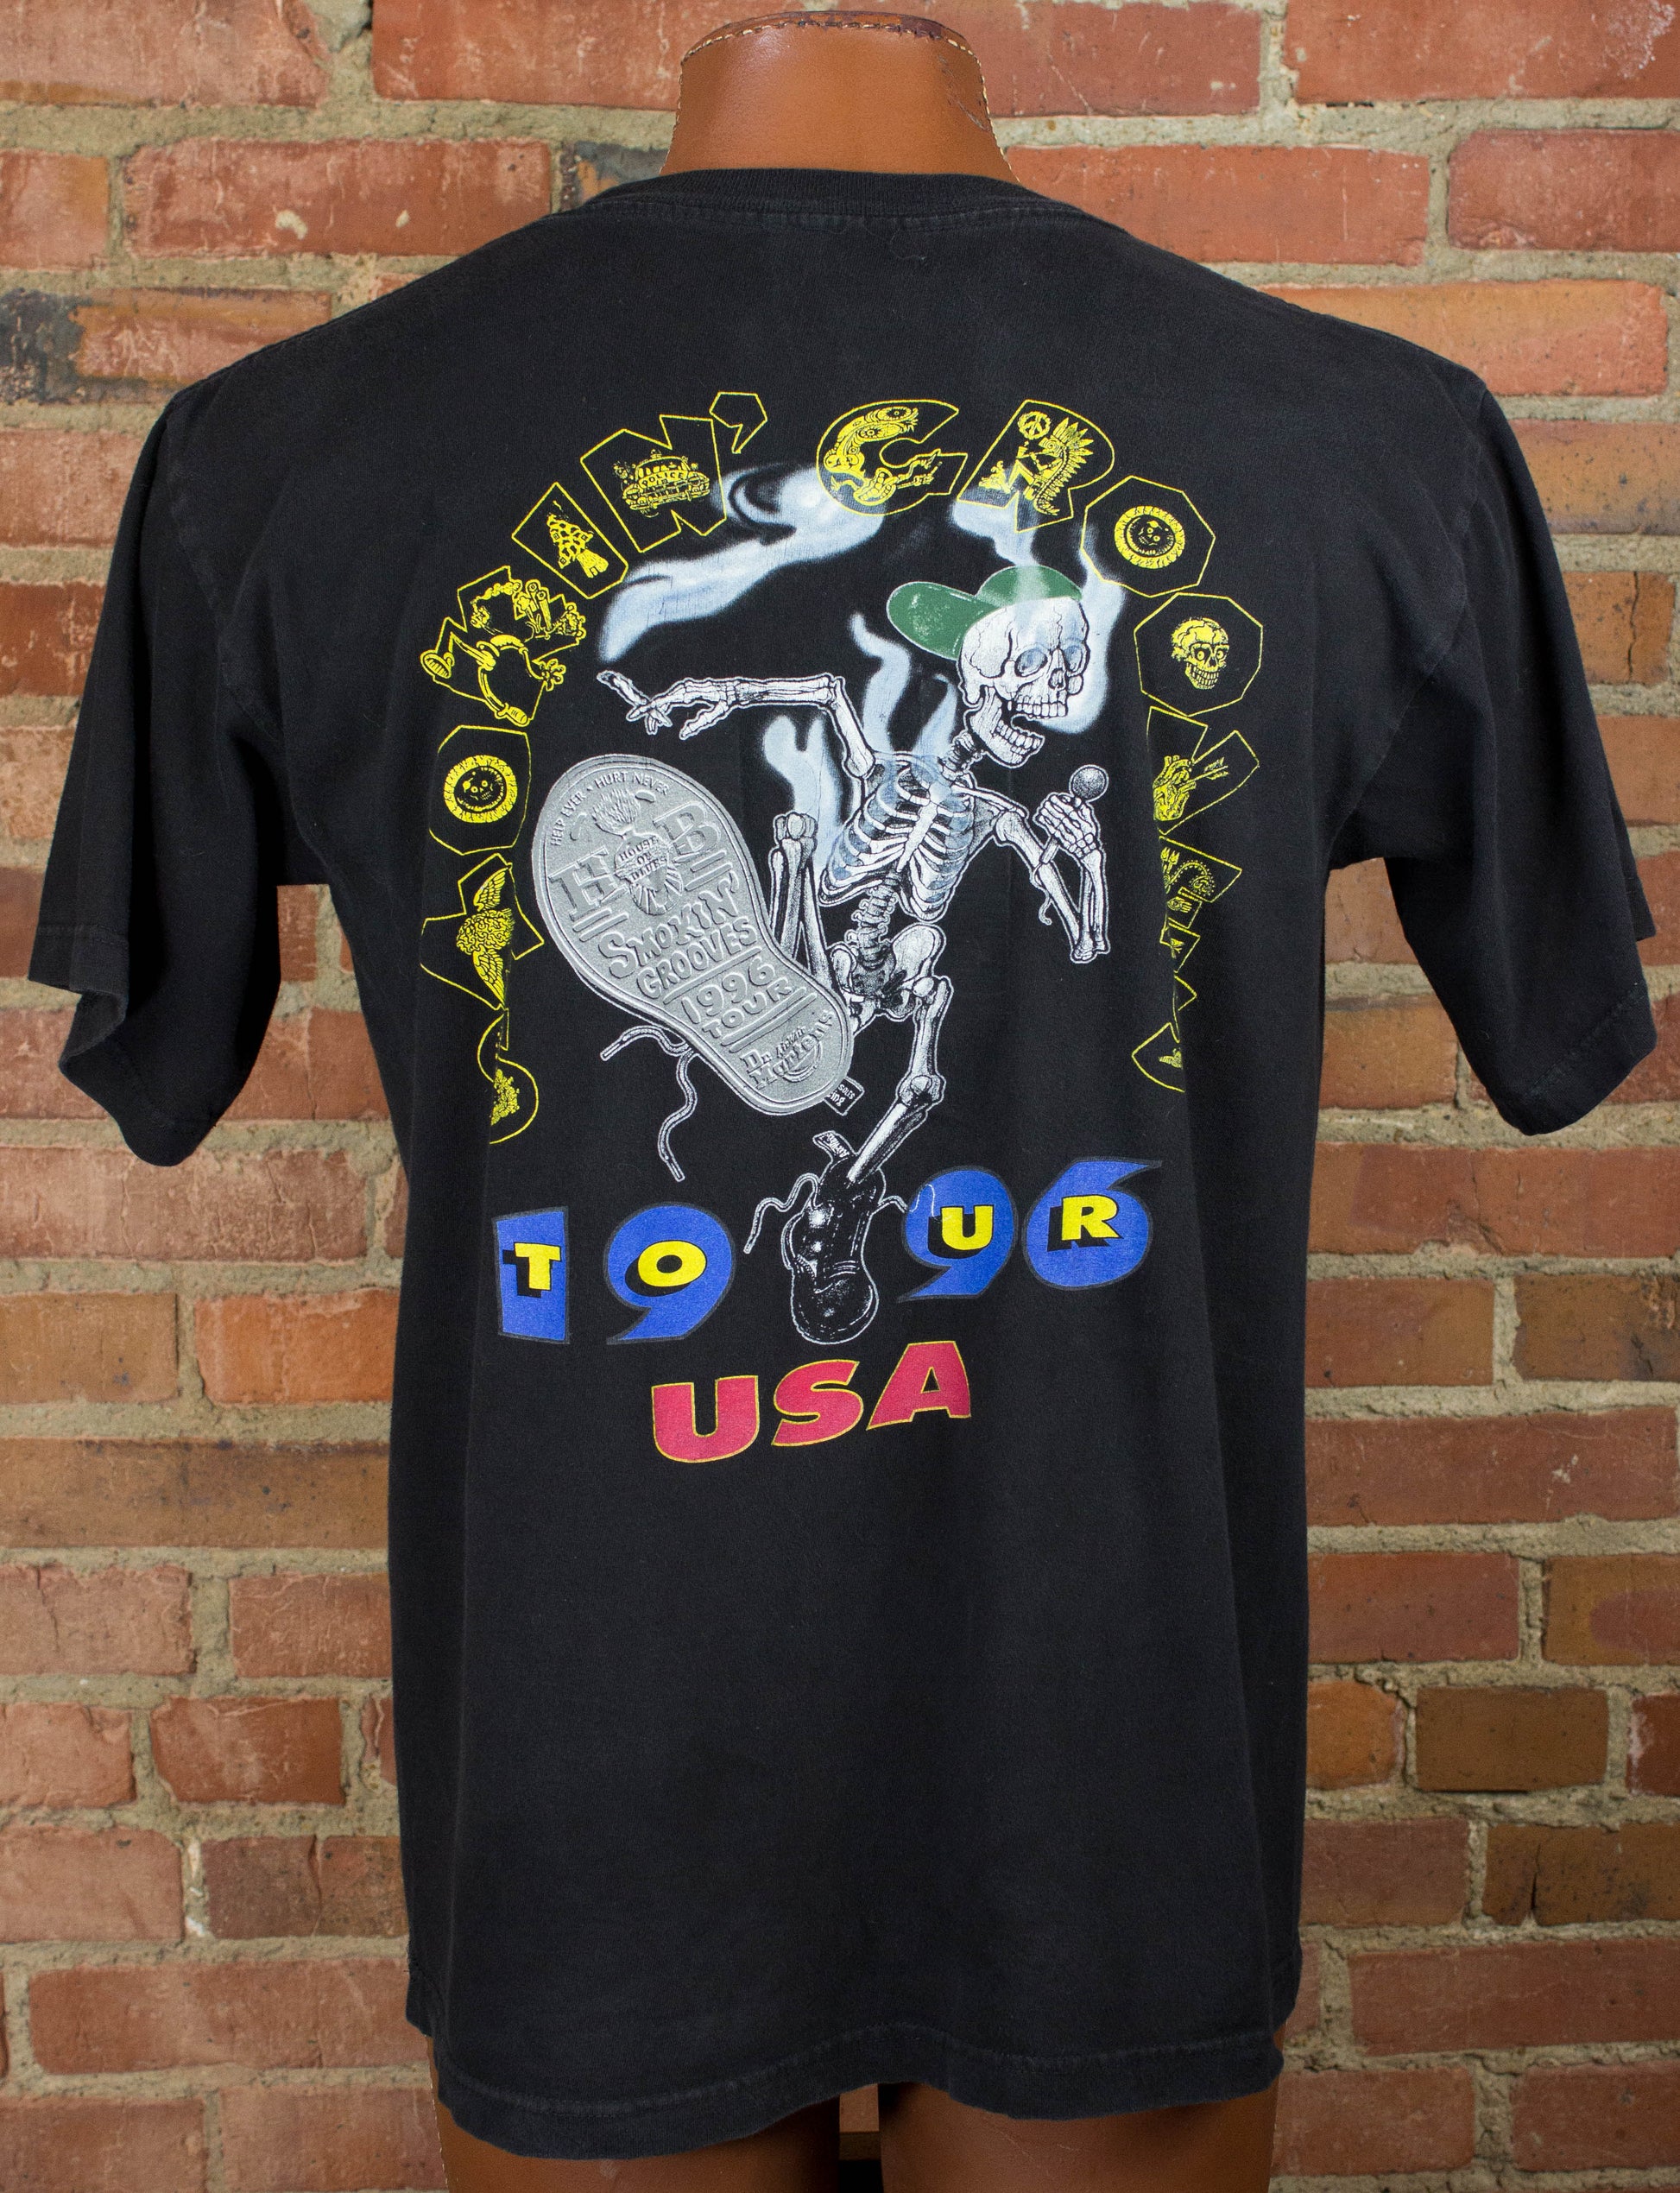 Smokin Grooves 1996 Tour USA Rap Concert T Shirt